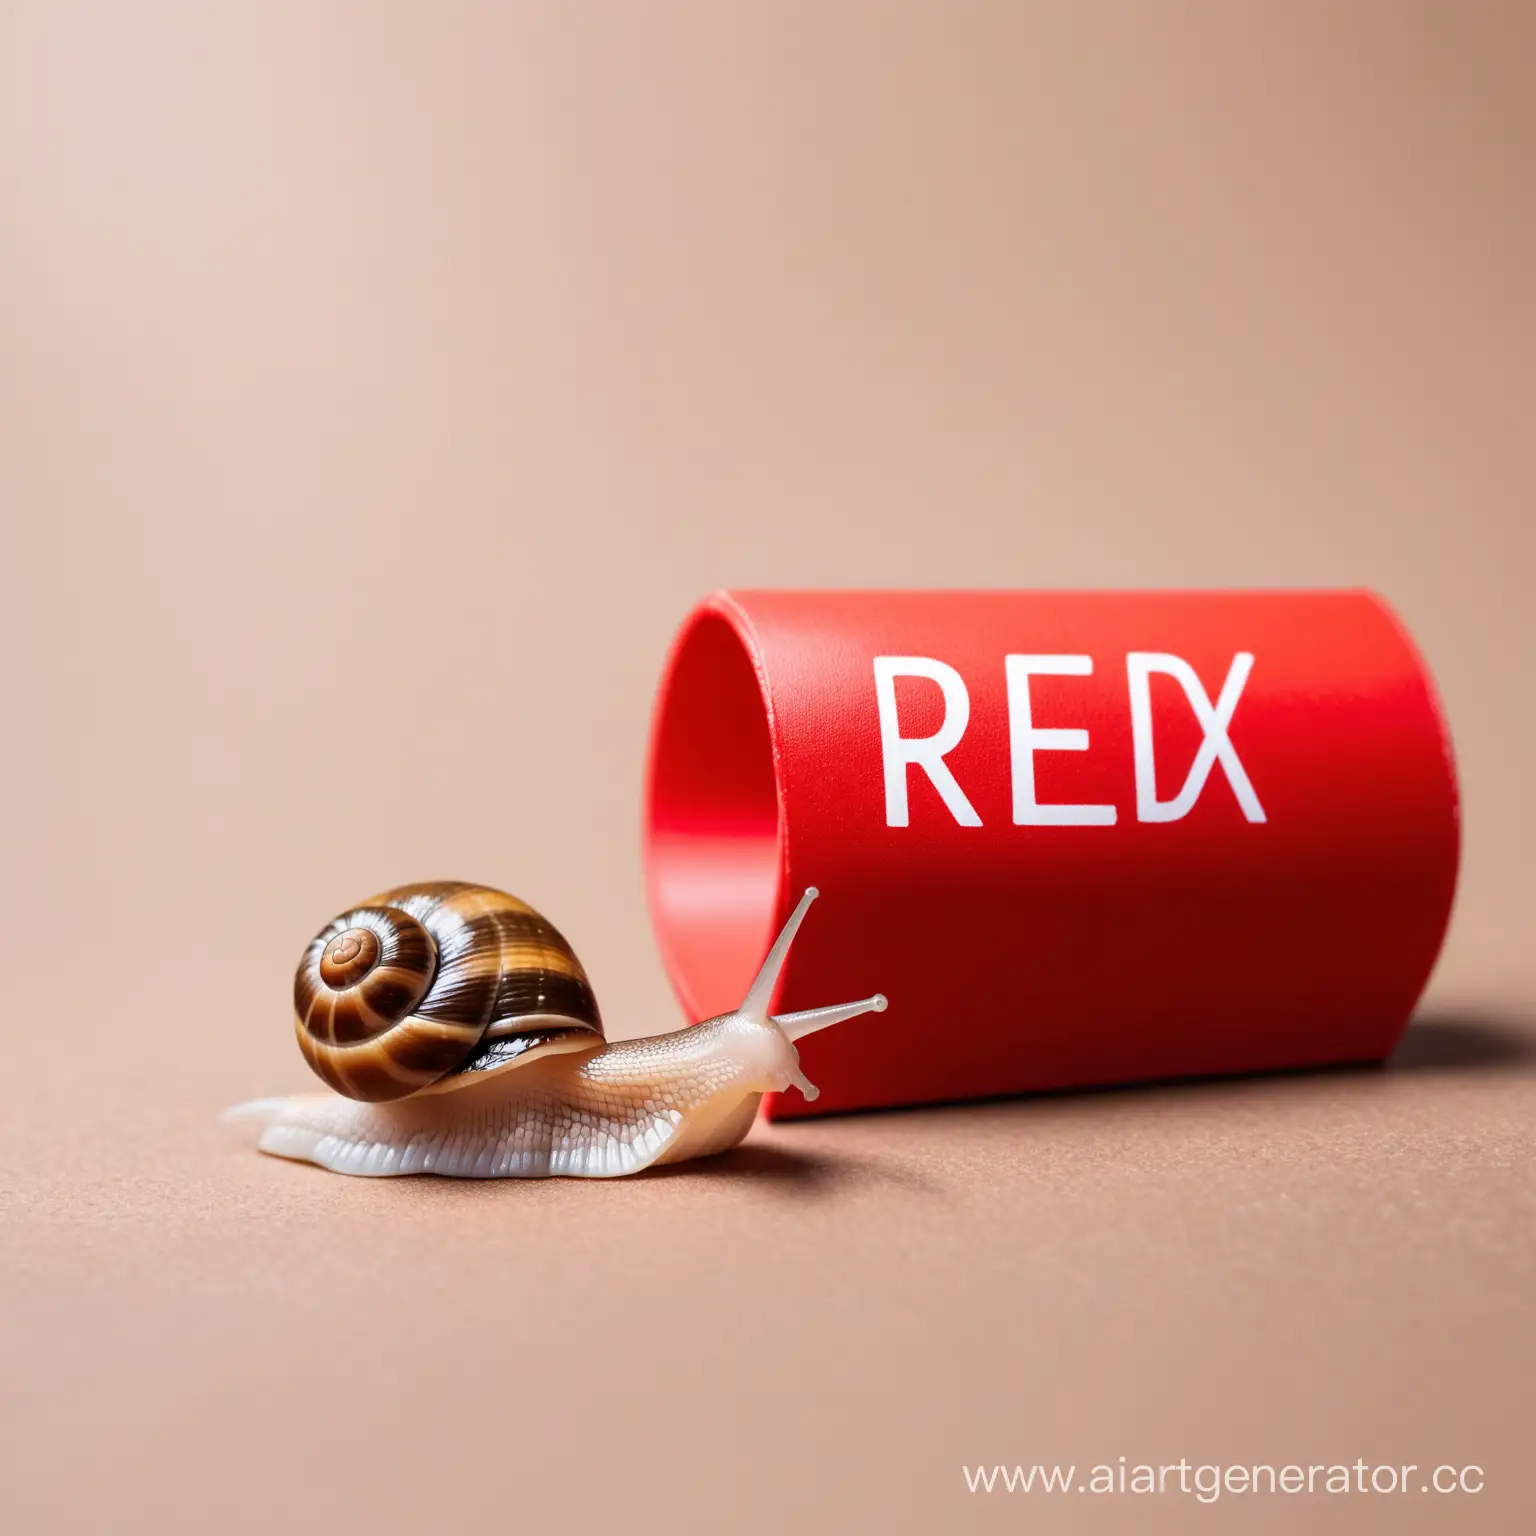 RedX-Inscription-Backdrop-with-Snail-Art